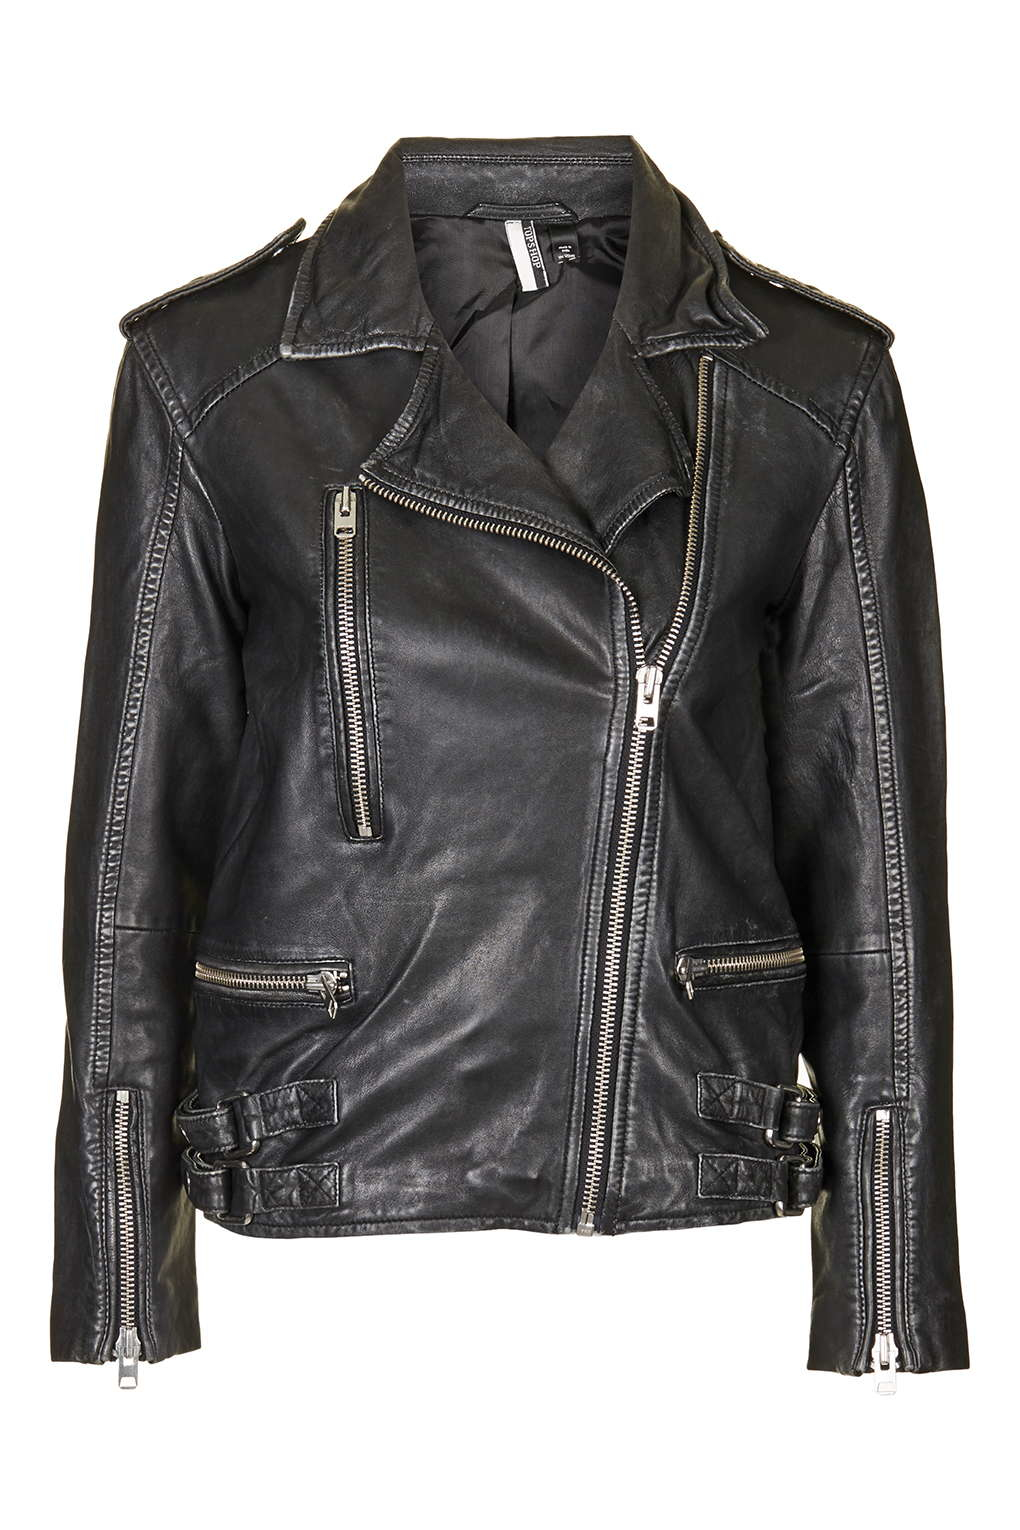 Lyst - Topshop Distressed Leather Biker Jacket in Black